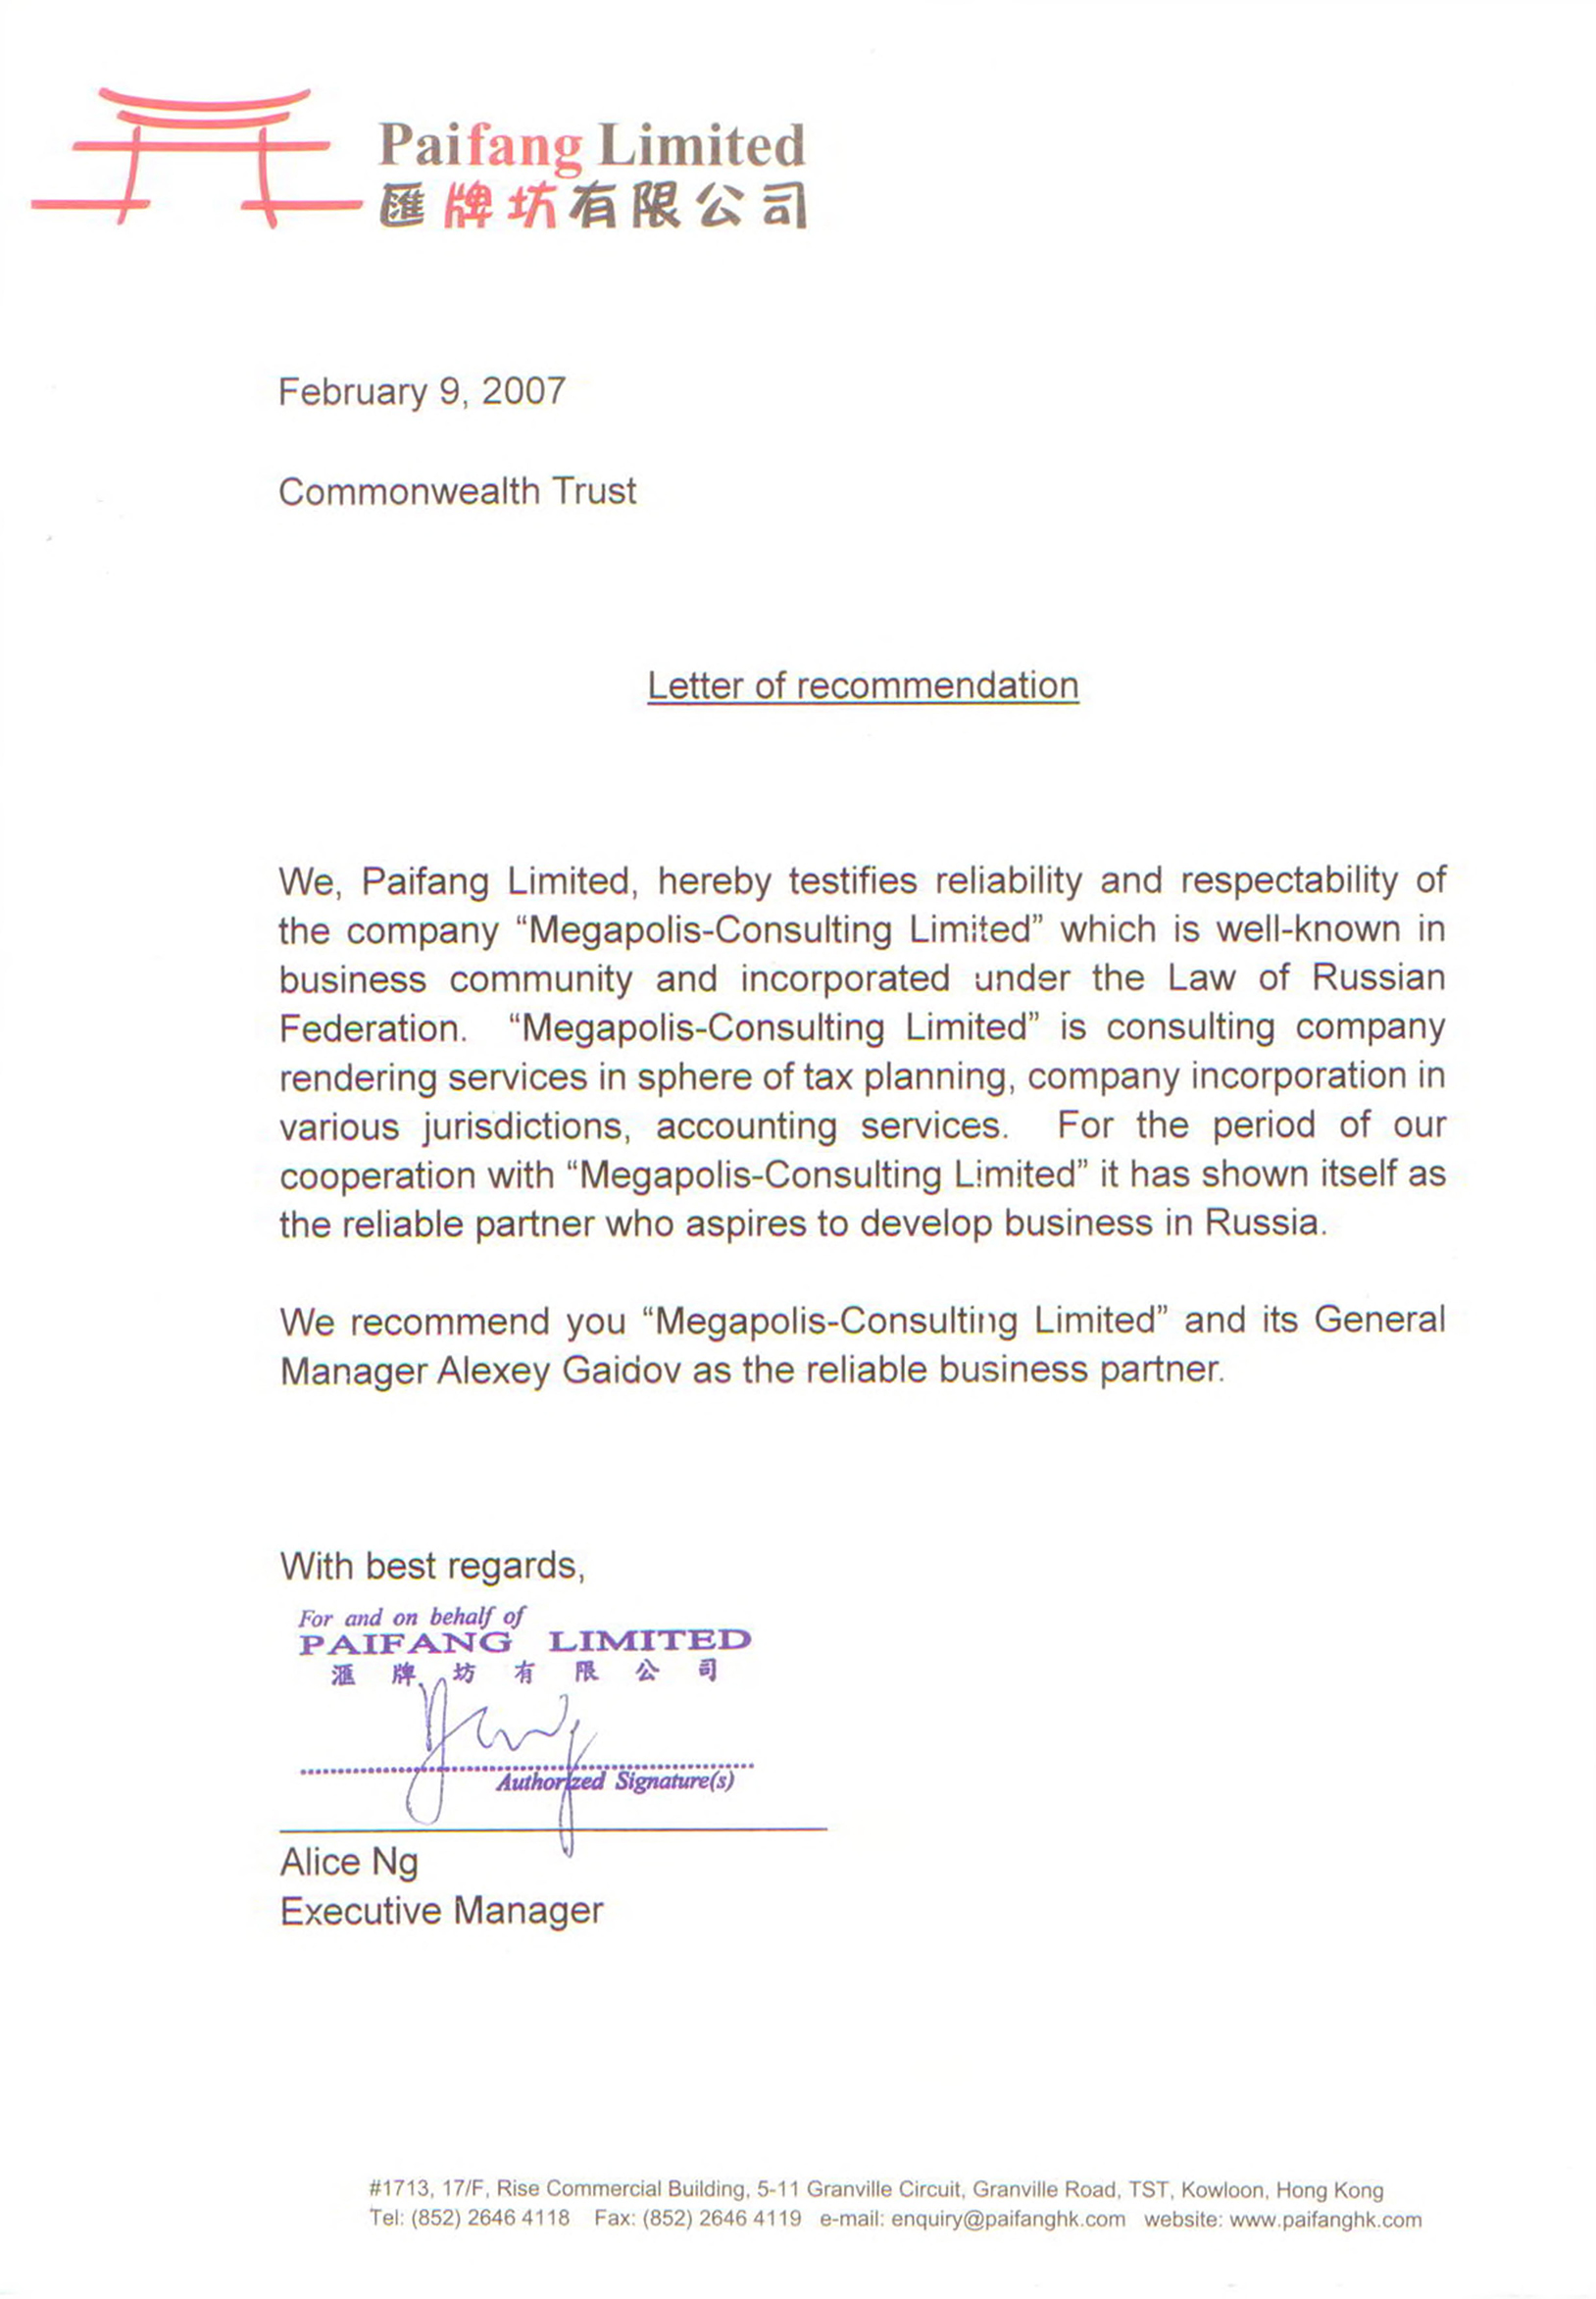  Благодарственное письмо от Paifang Limited